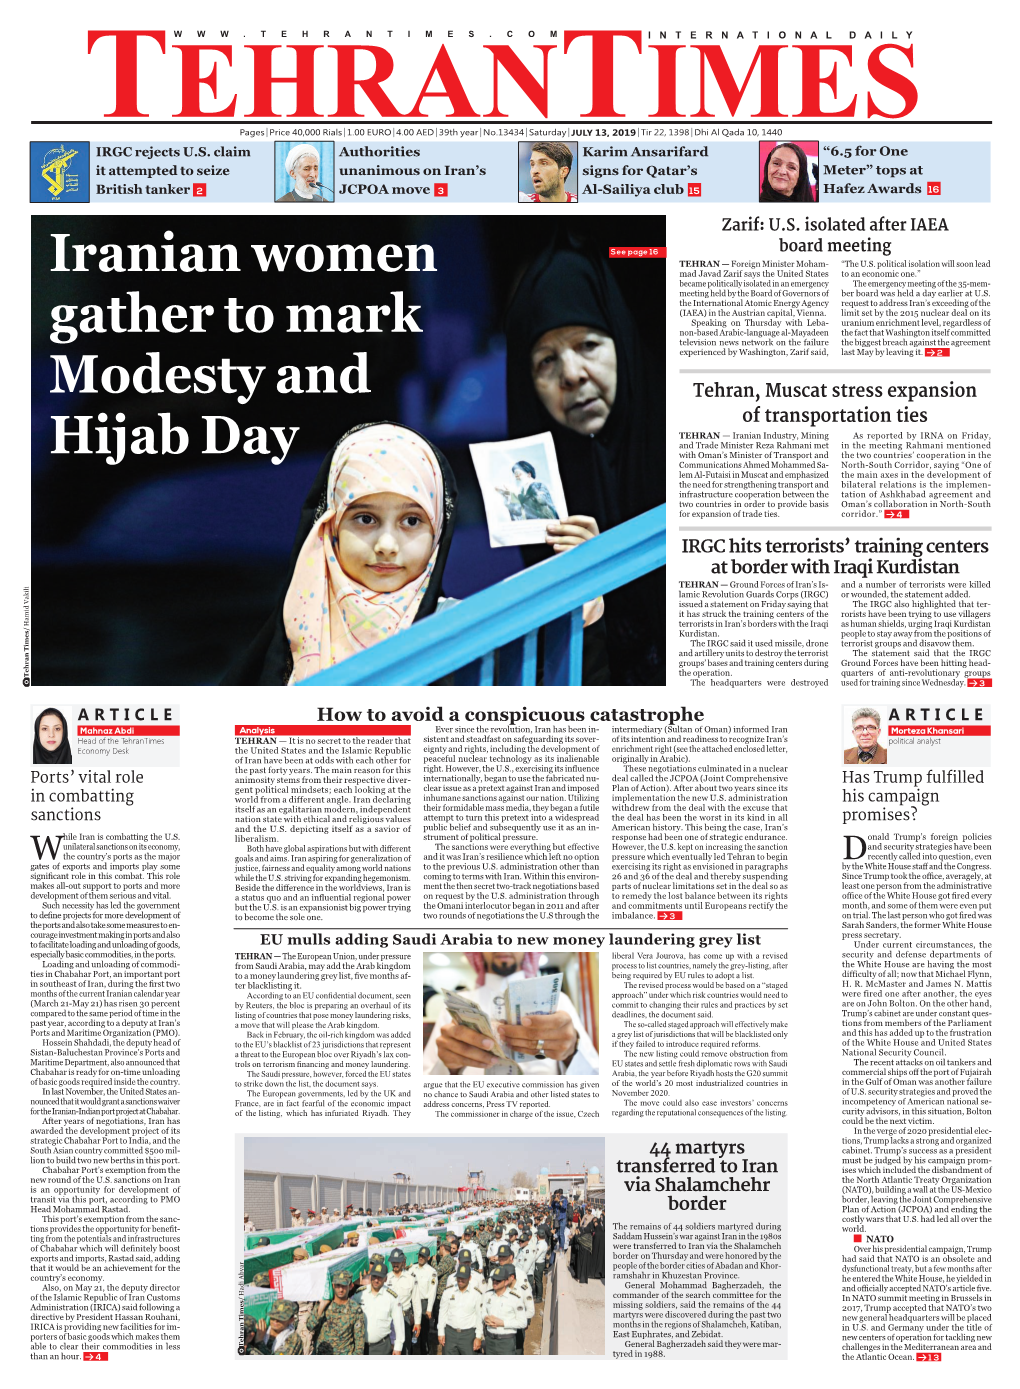 Iranian Women Gather to Mark Modesty and Hijab